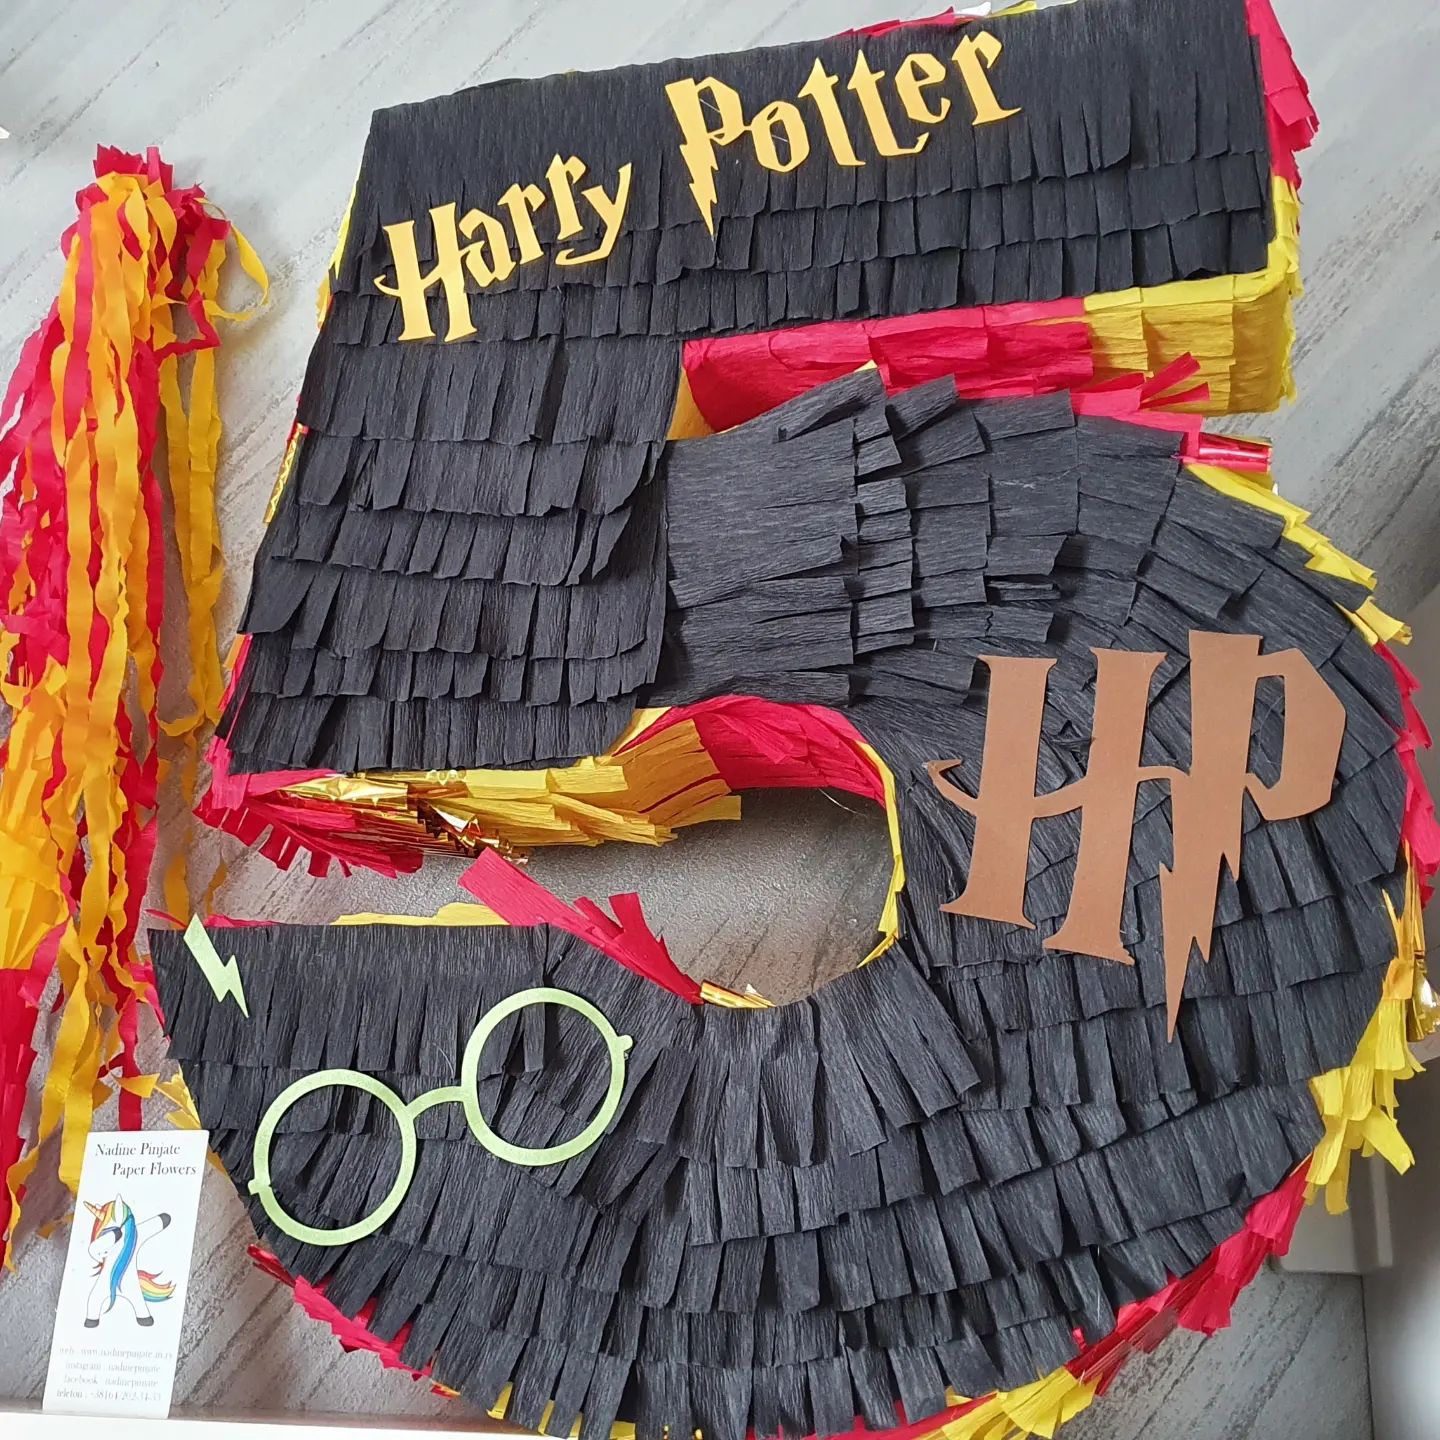 Pinjata broj 5 - Harry Potter